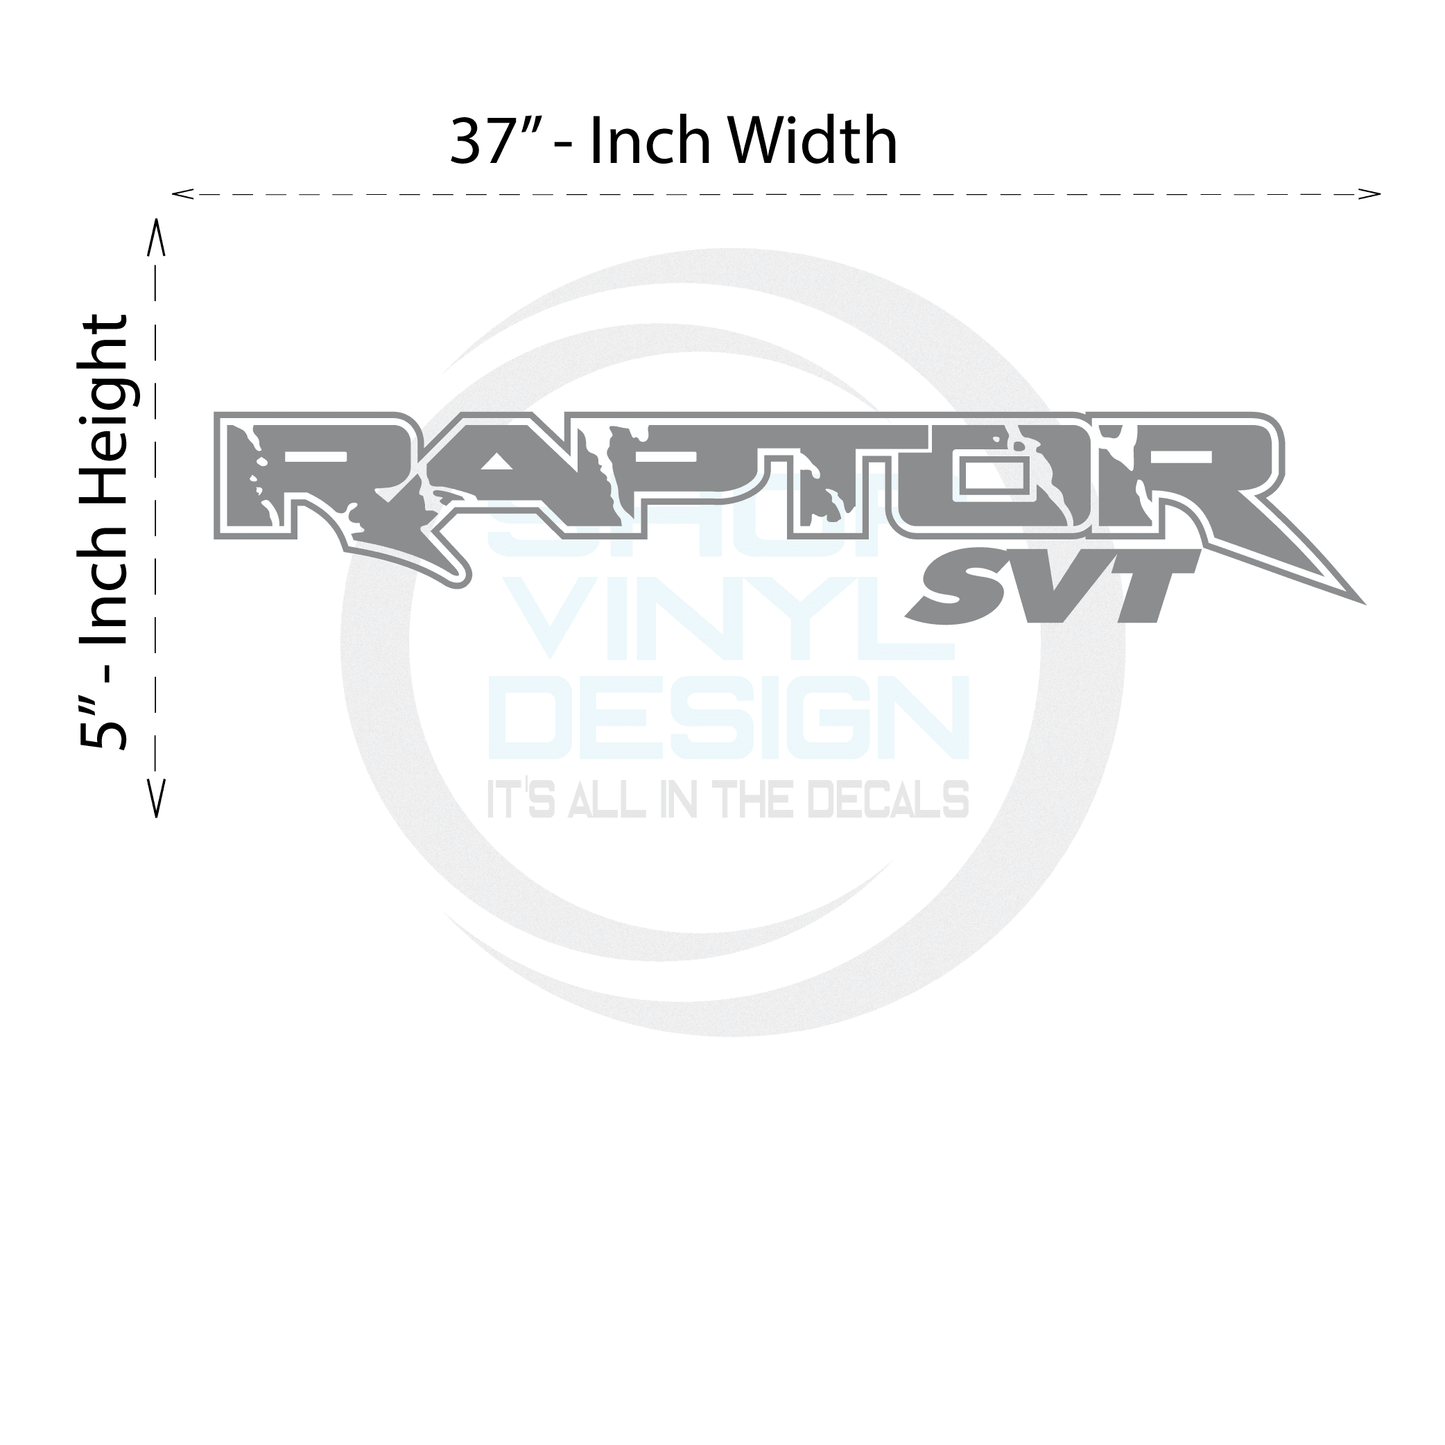 Shop Vinyl Design F-150 Raptor SVT Replacement Bedside Decals #010 Vehicle Decal Shop Vinyl Design decals stickers